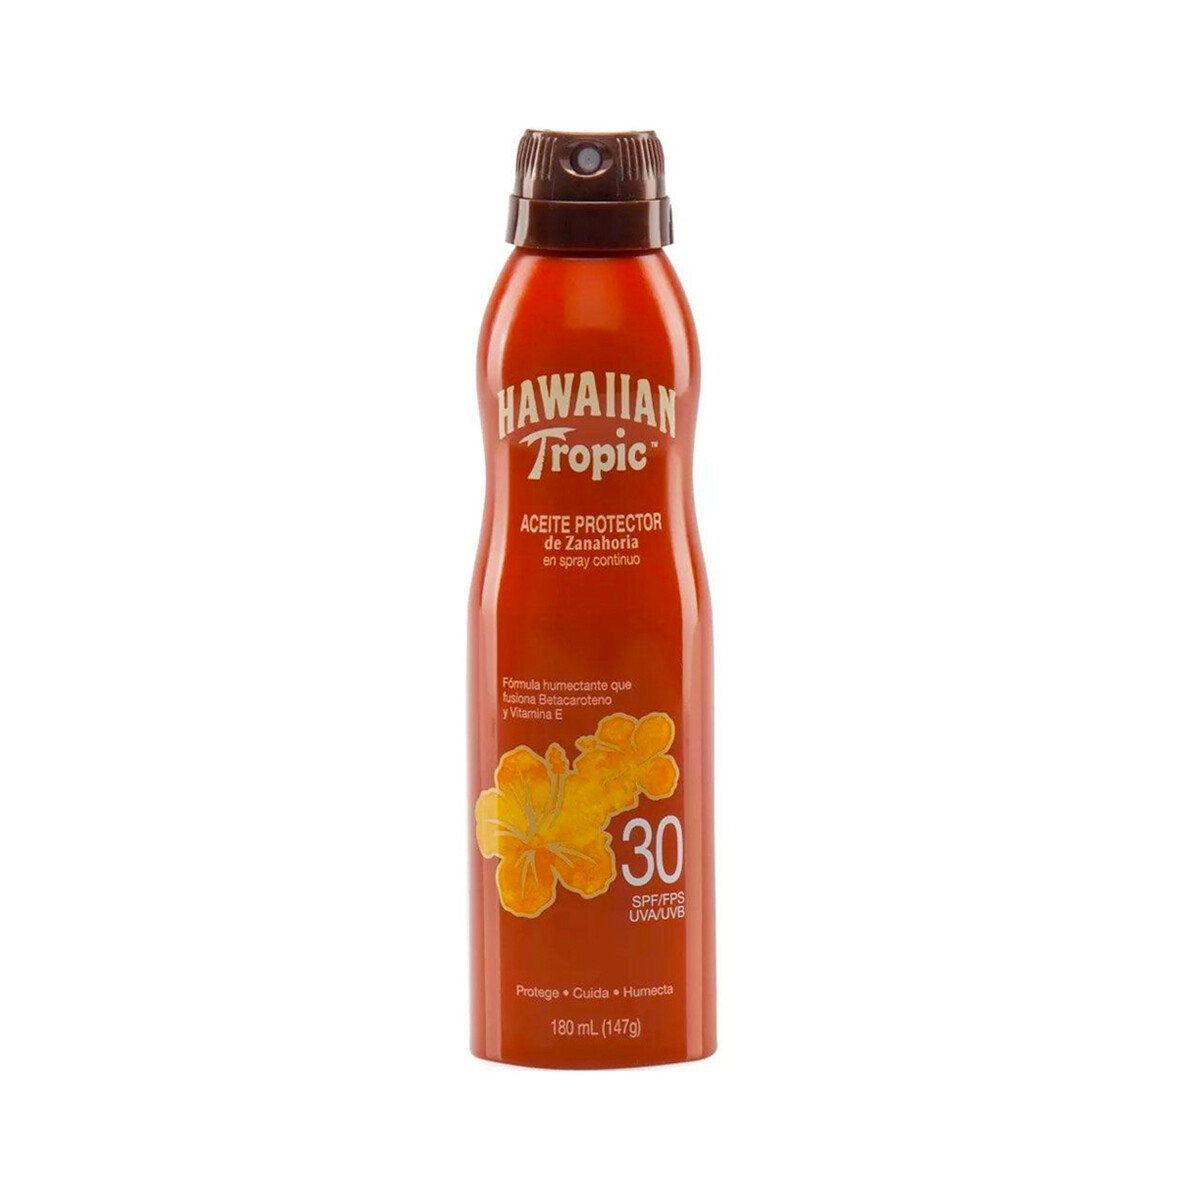 Protector Solar Hawaiian Tropic Aceite Zanahoria en Spray Fps 30 - 180 ml 